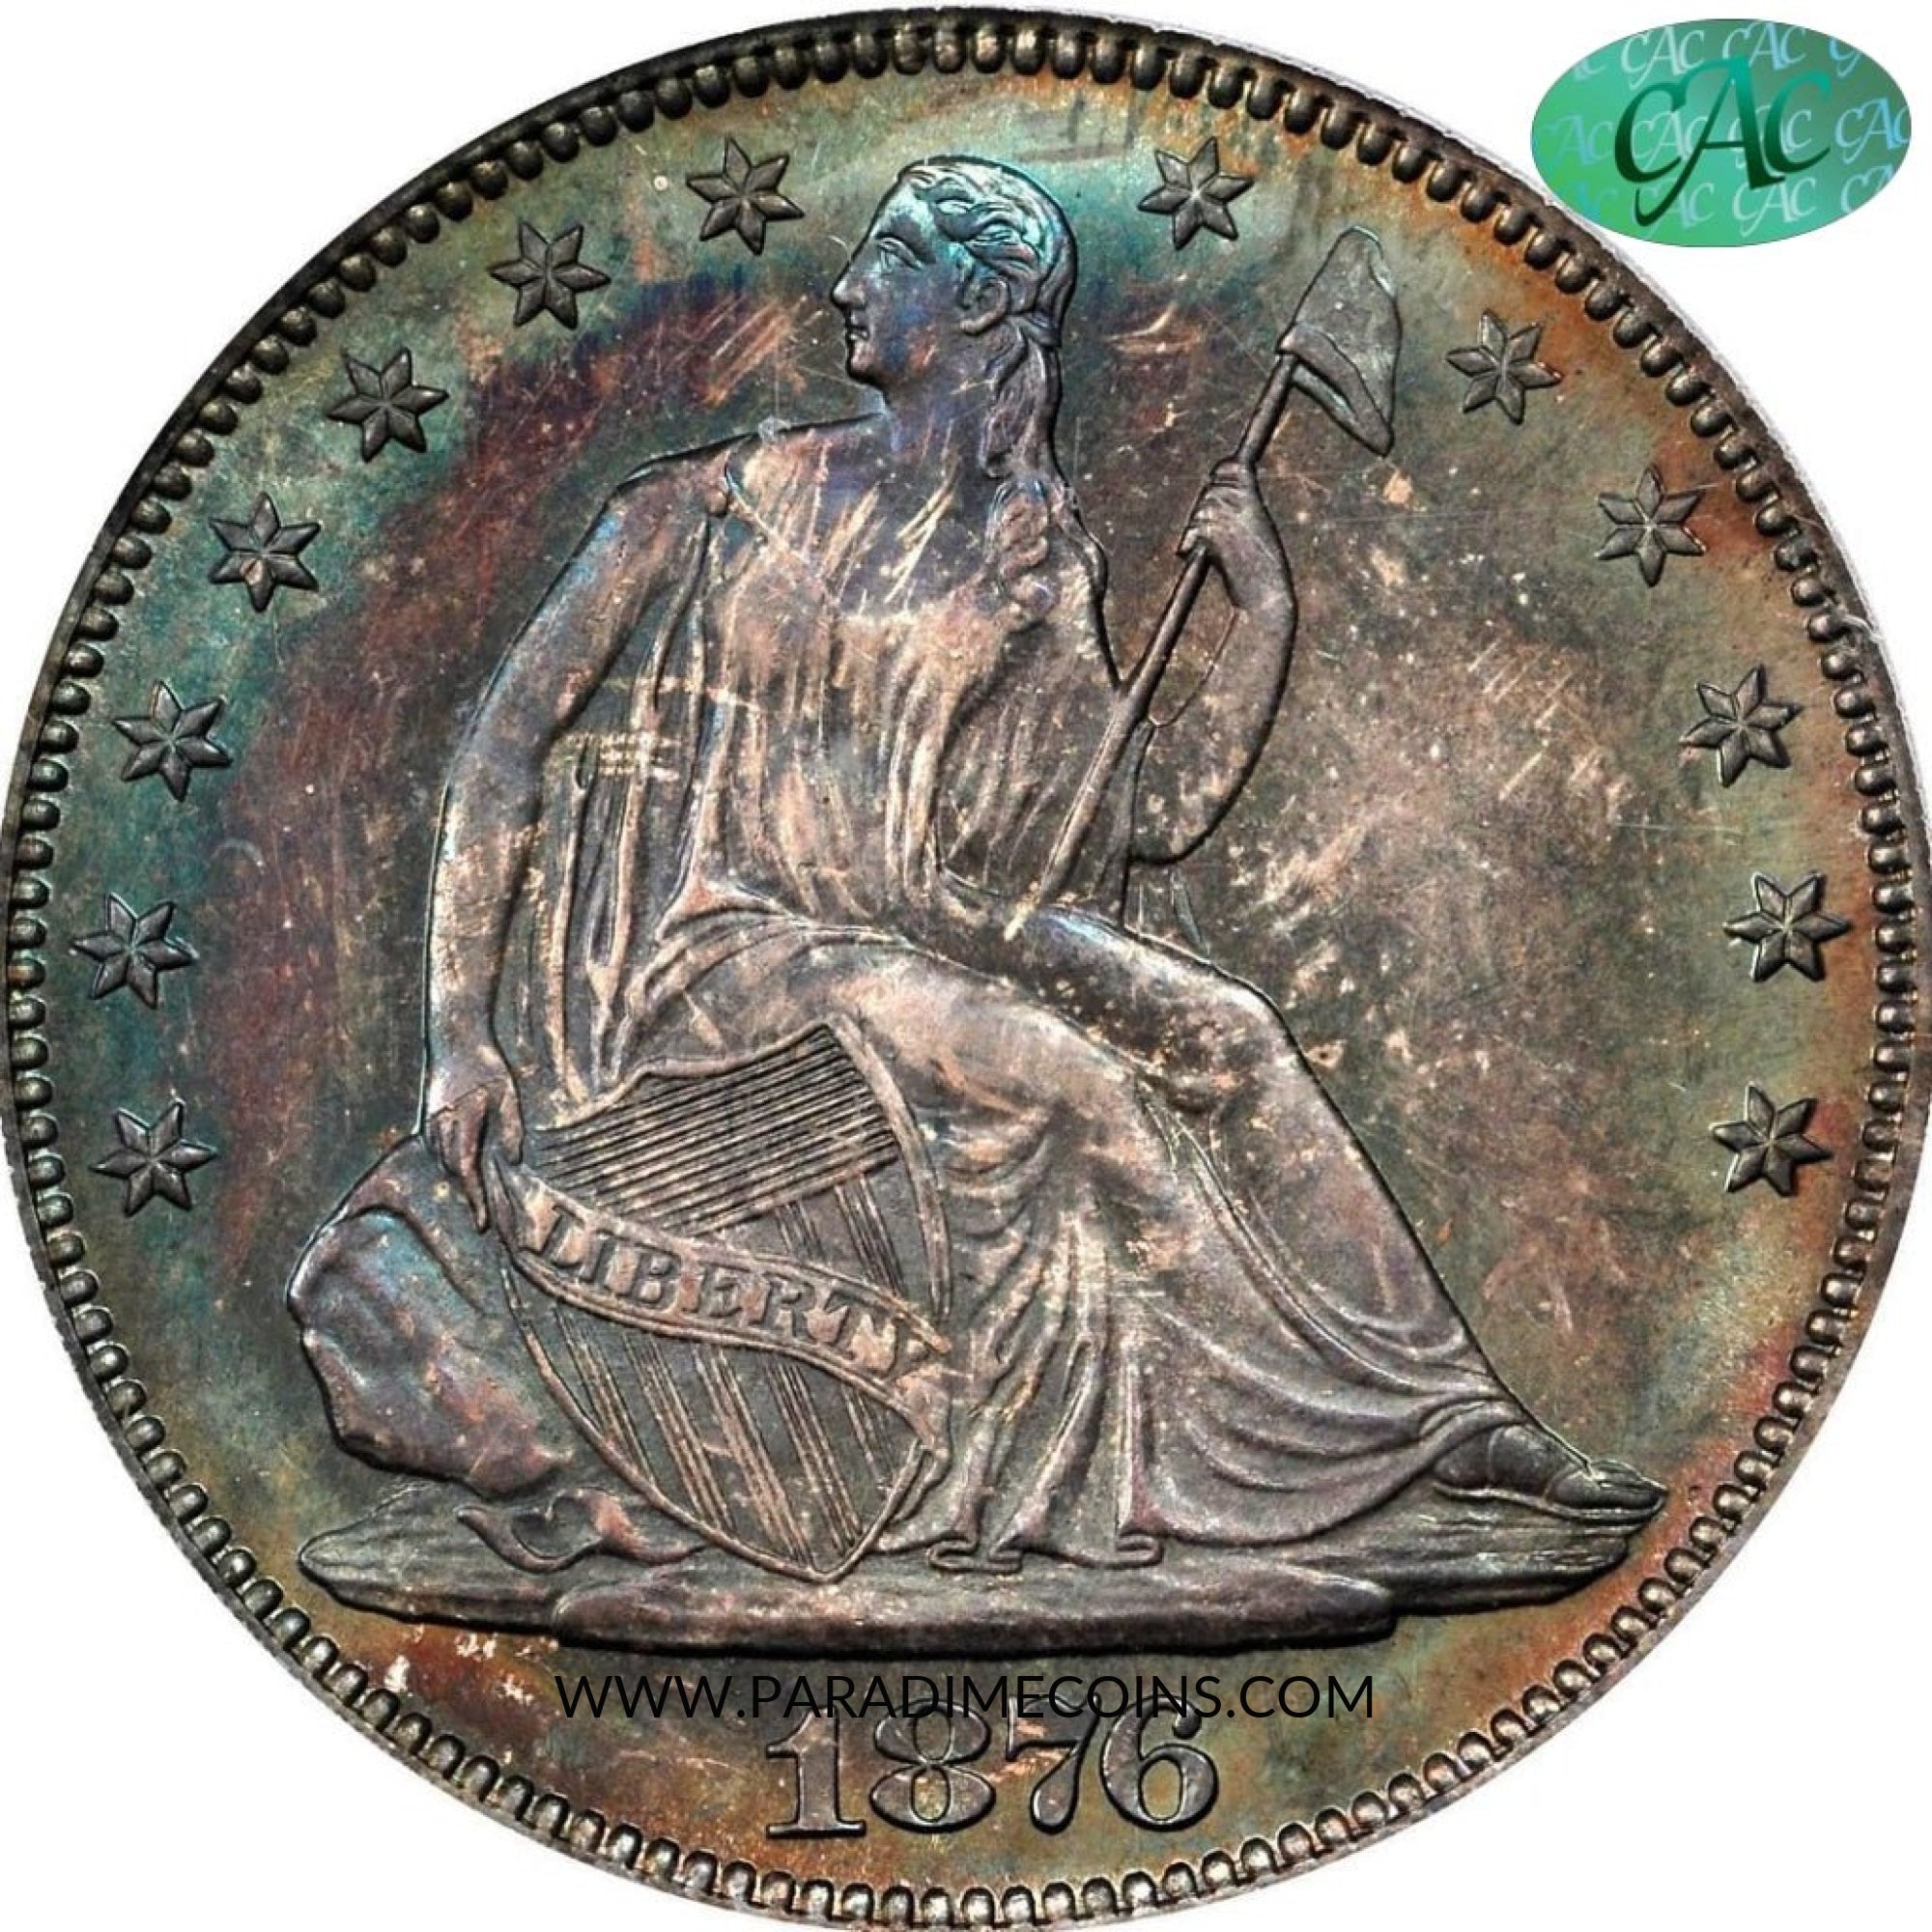 1876 50C PR66 PCGS CAC - Paradime Coins | PCGS NGC CACG CAC Rare US Numismatic Coins For Sale